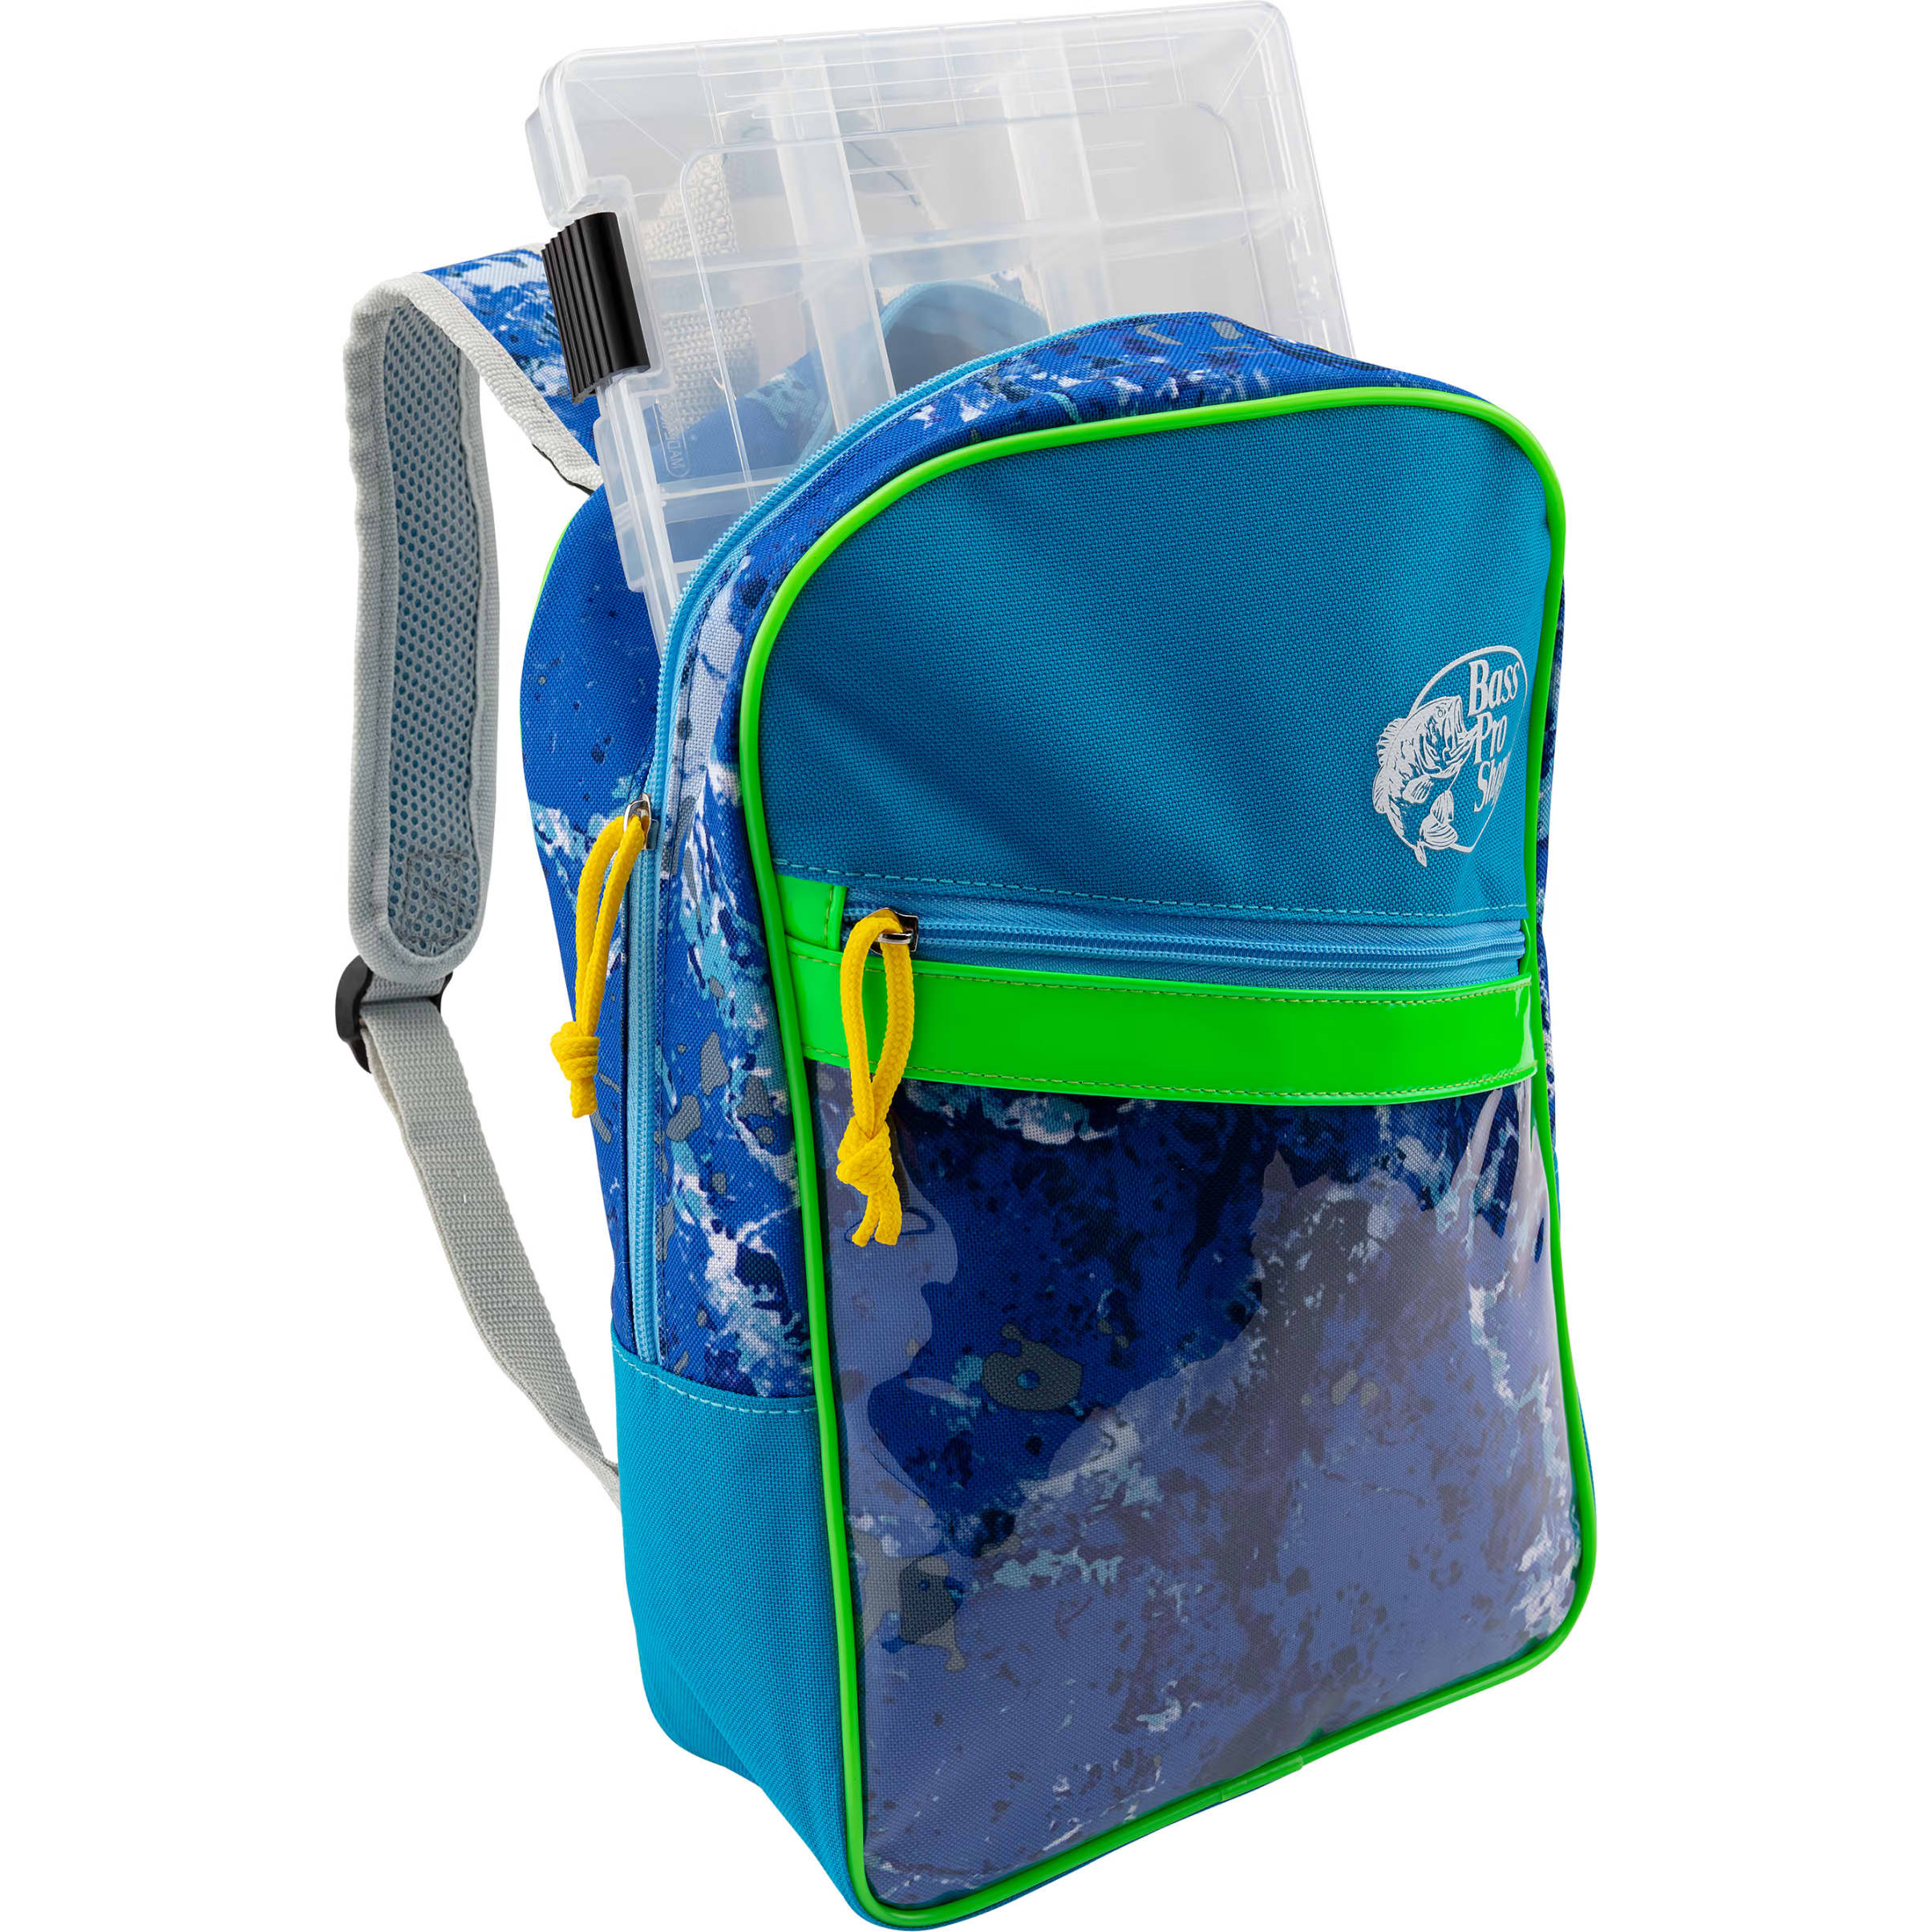 Bass Pro Shops® Tackle Backpack 3600 for Kids